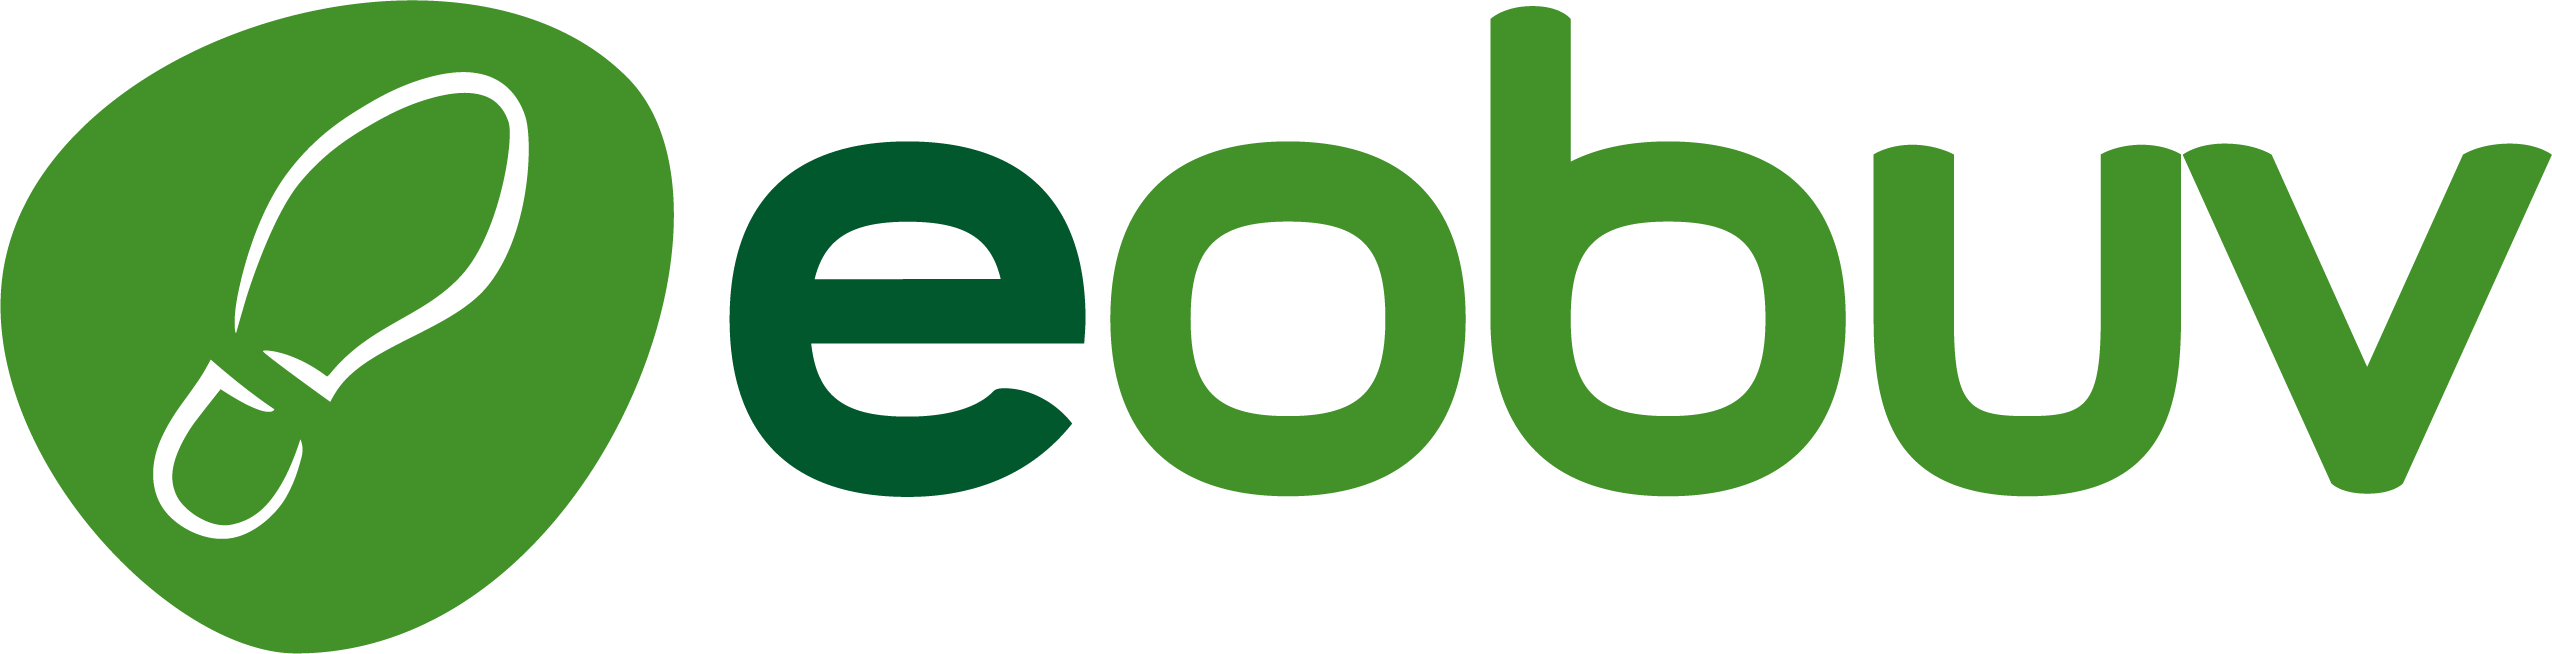 Eobuv logo